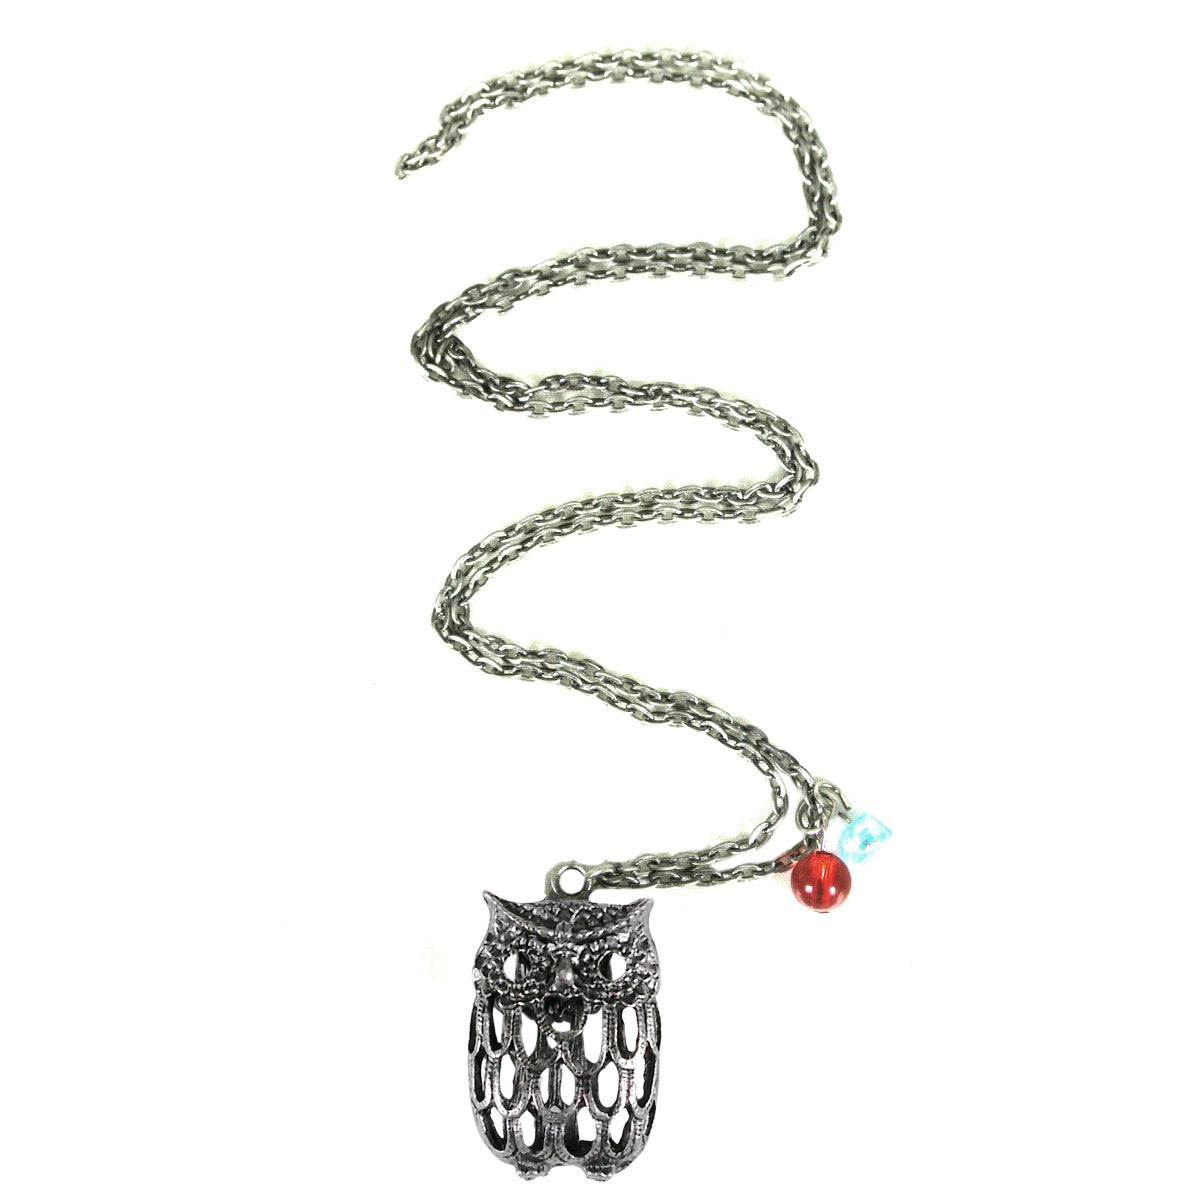 Retro Hollow Owl Pendant Necklace